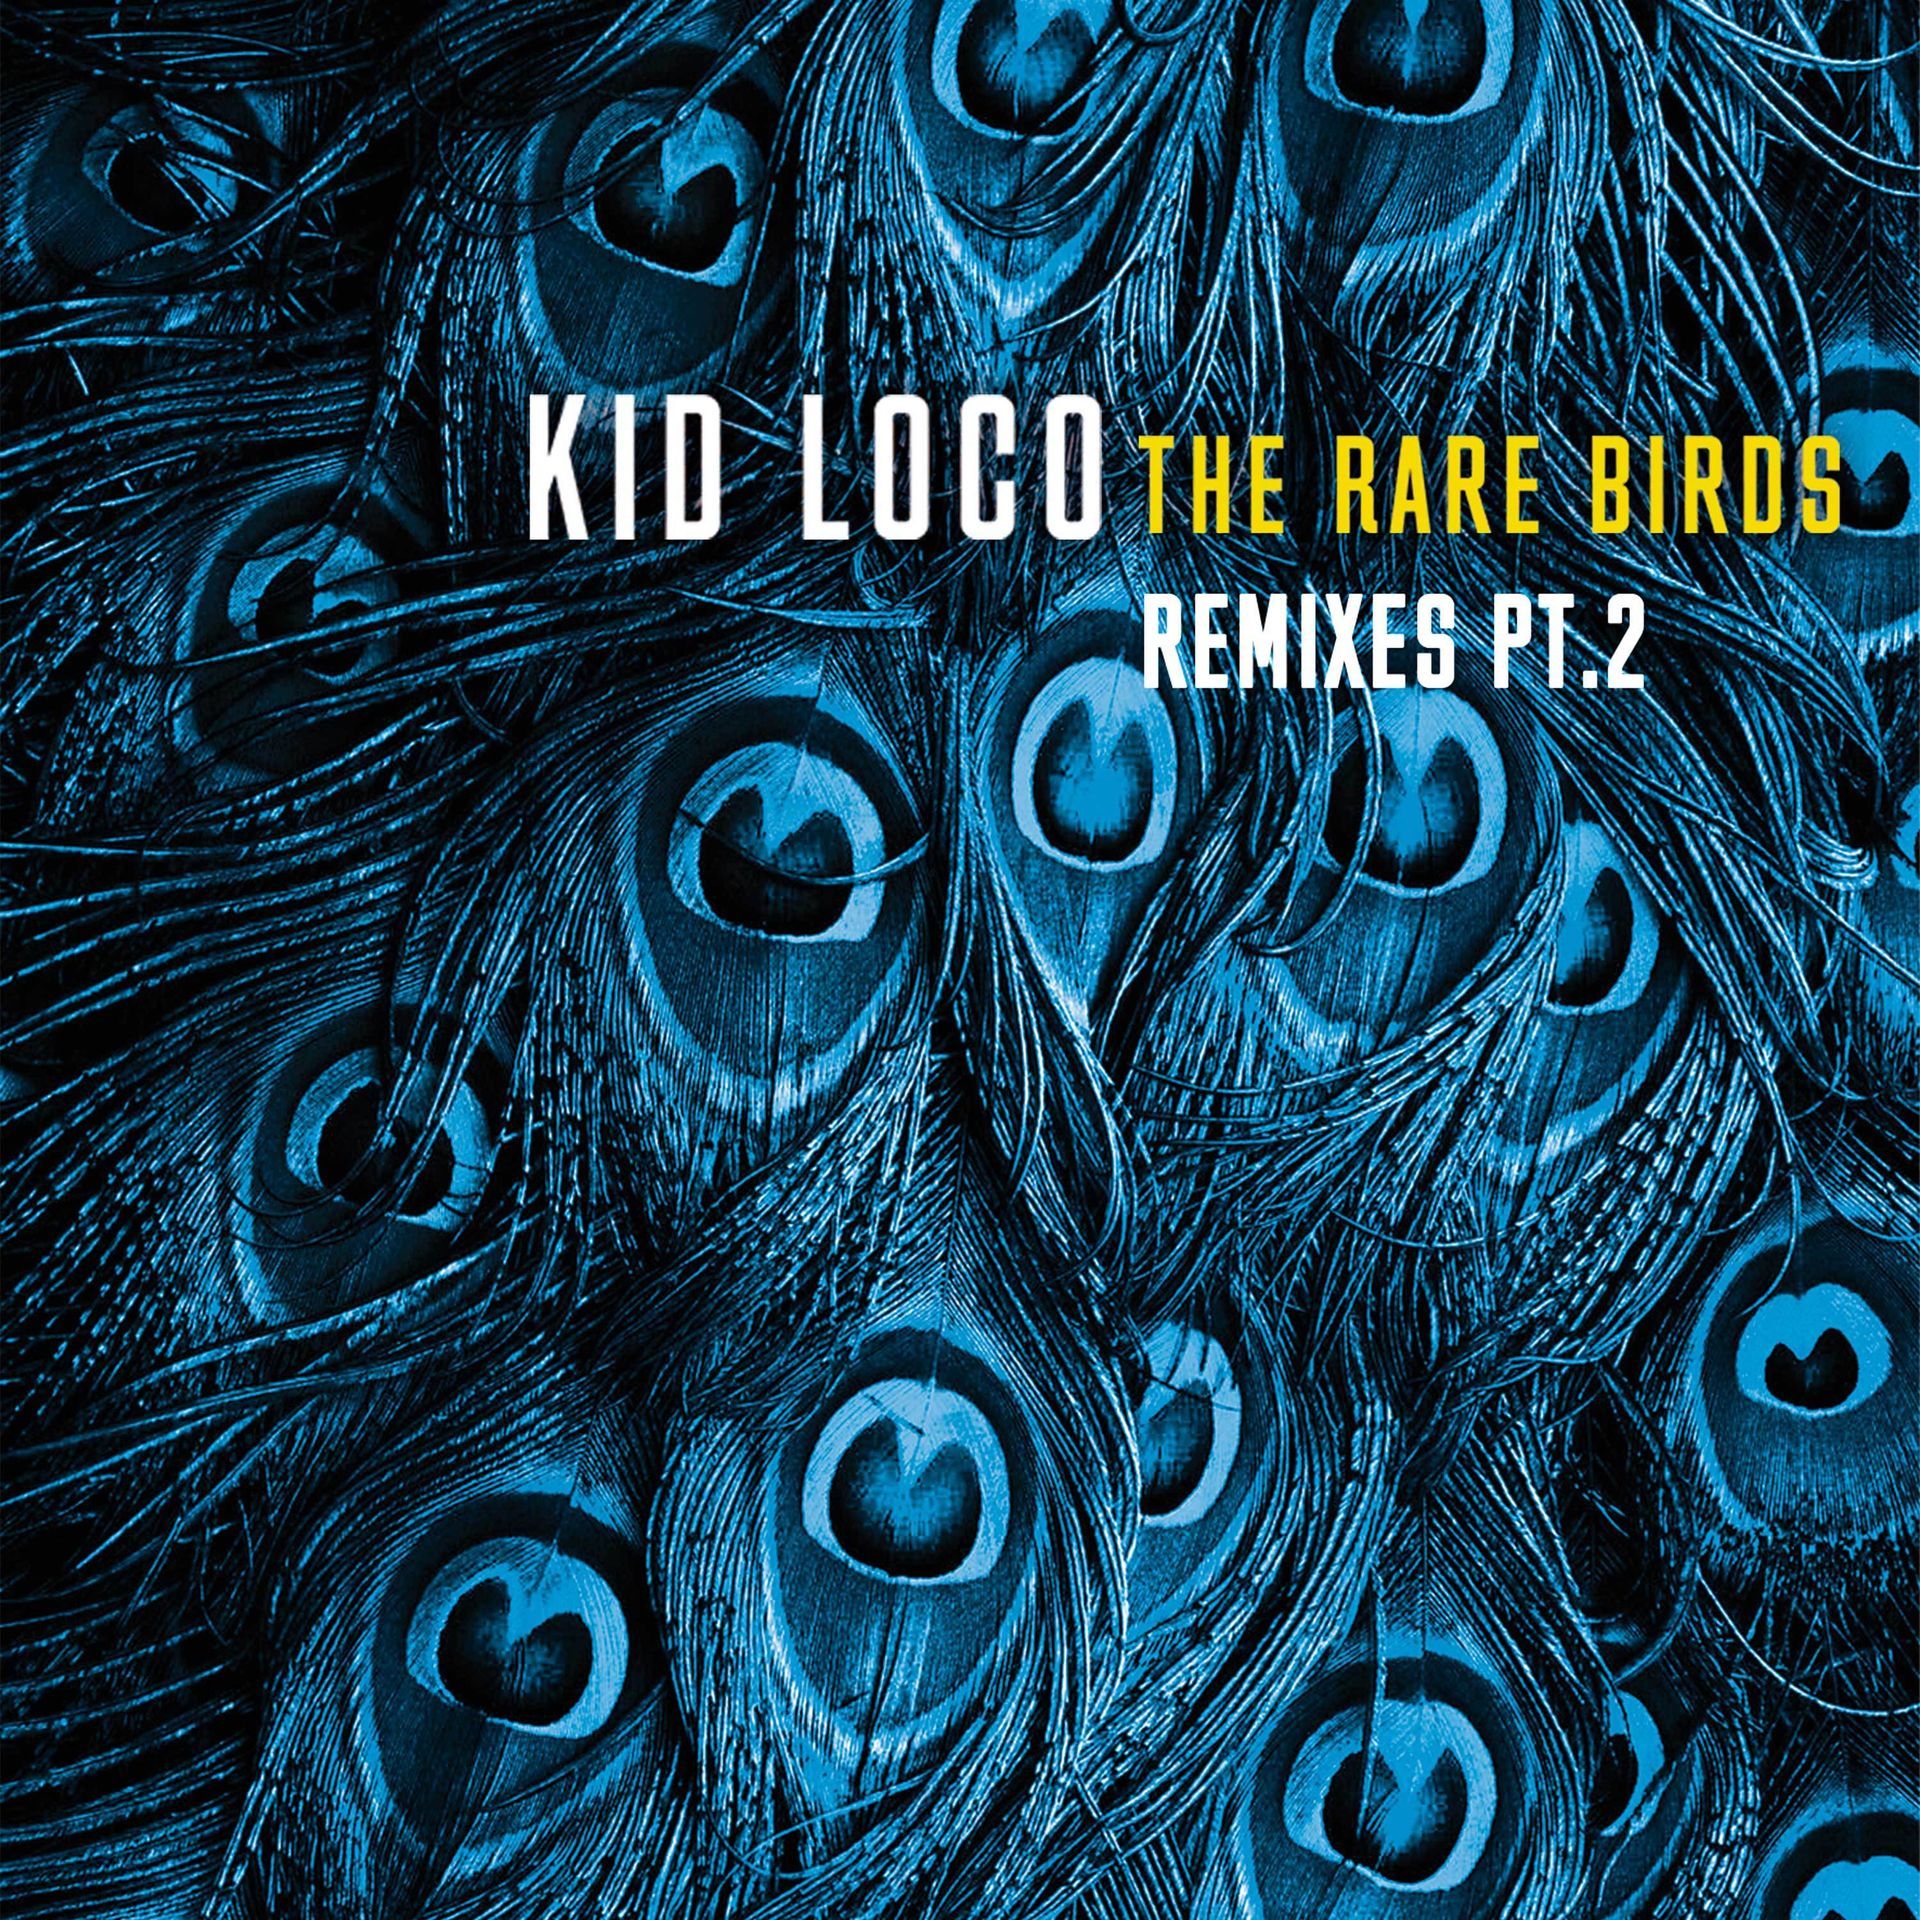 The Rare Birds Remixes, Pt. 2 album art